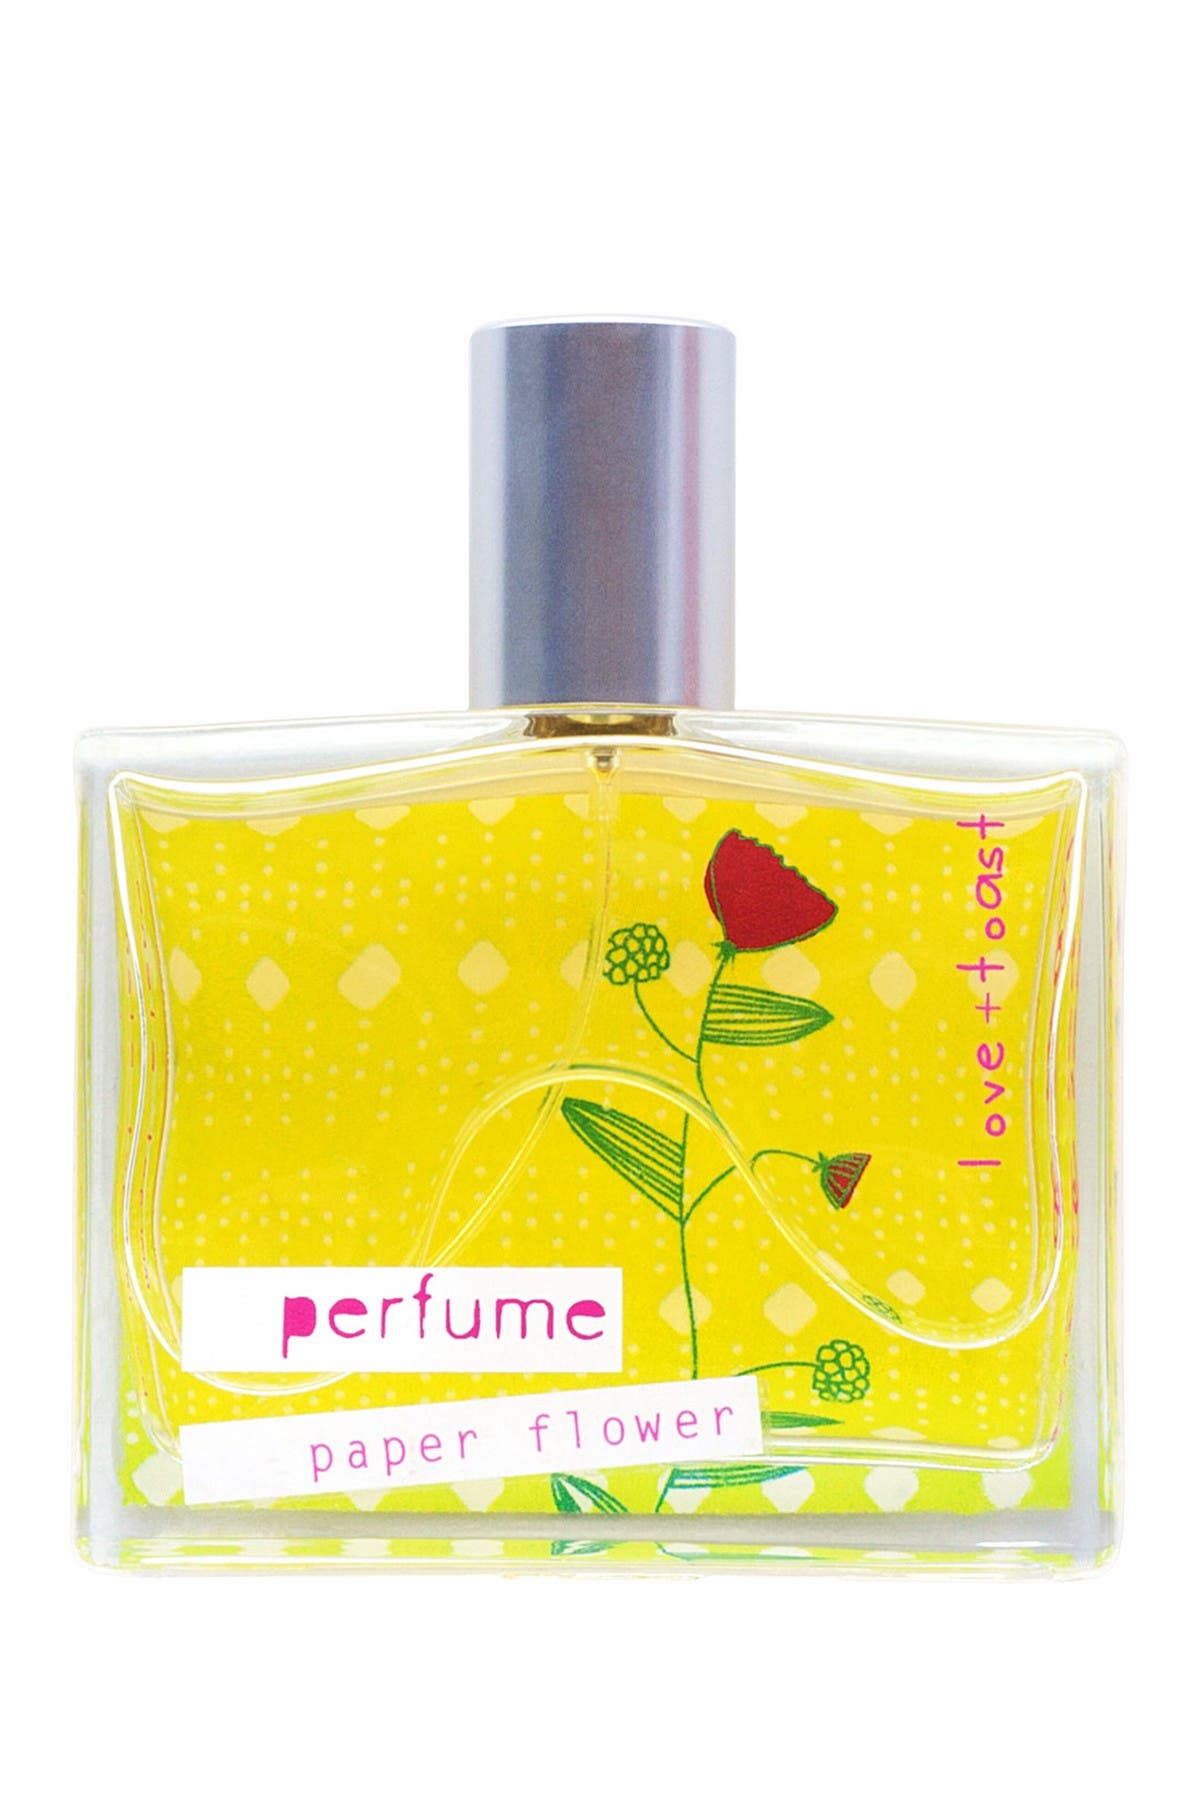 flower of love perfume